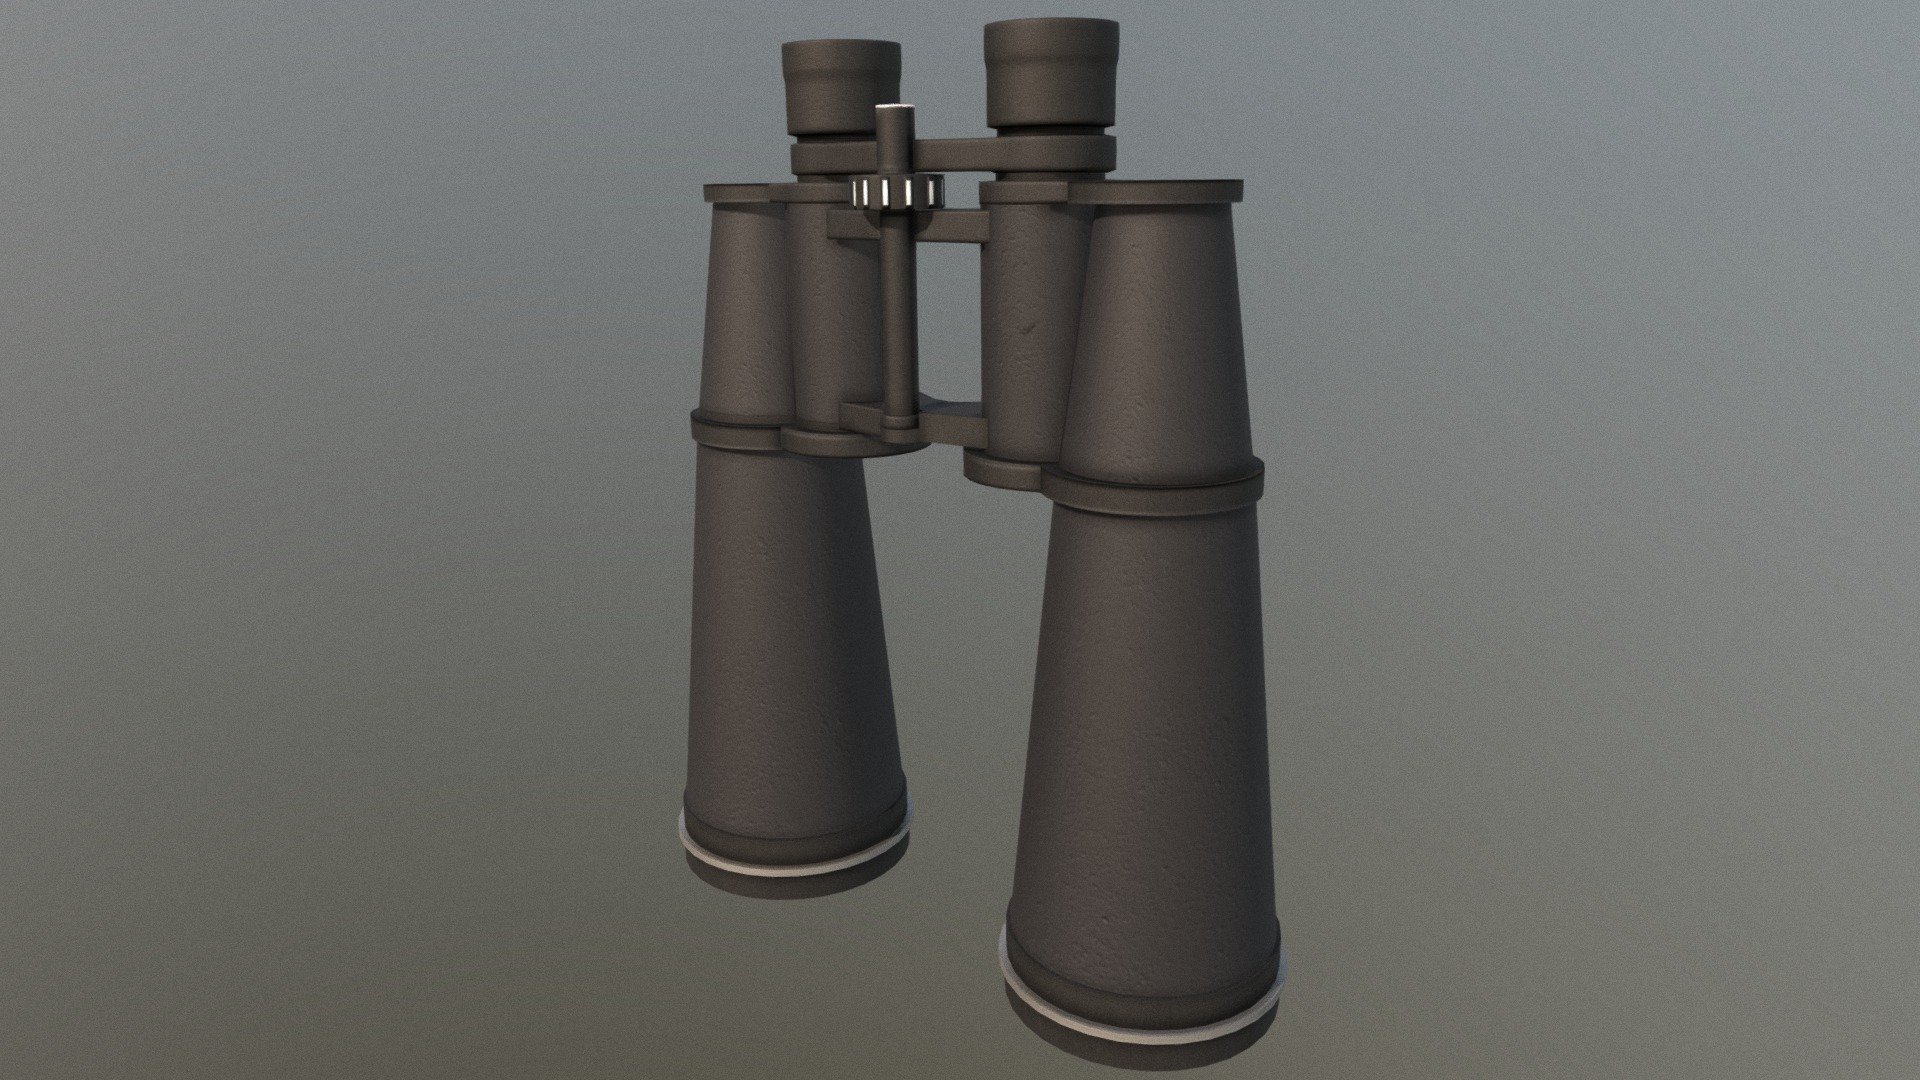 Soviet binoculars